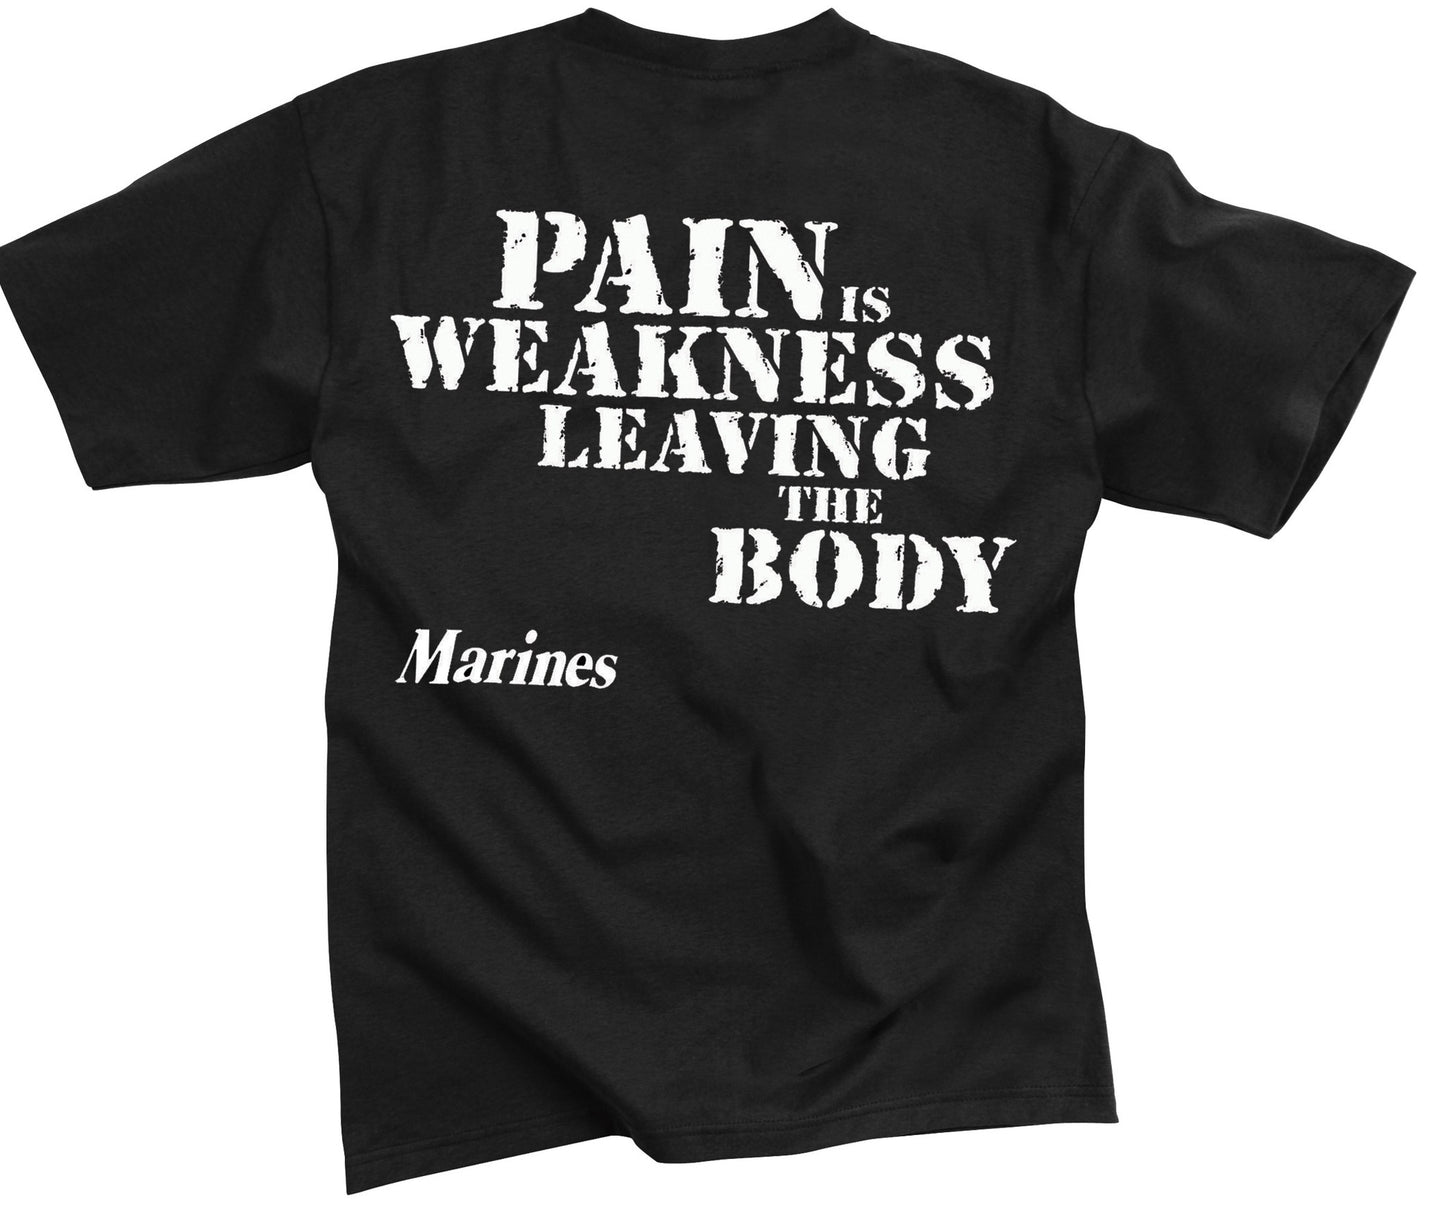 Black USMC Marines T-Shirt 'Pain Is Weakness' Mens Tee Shirt